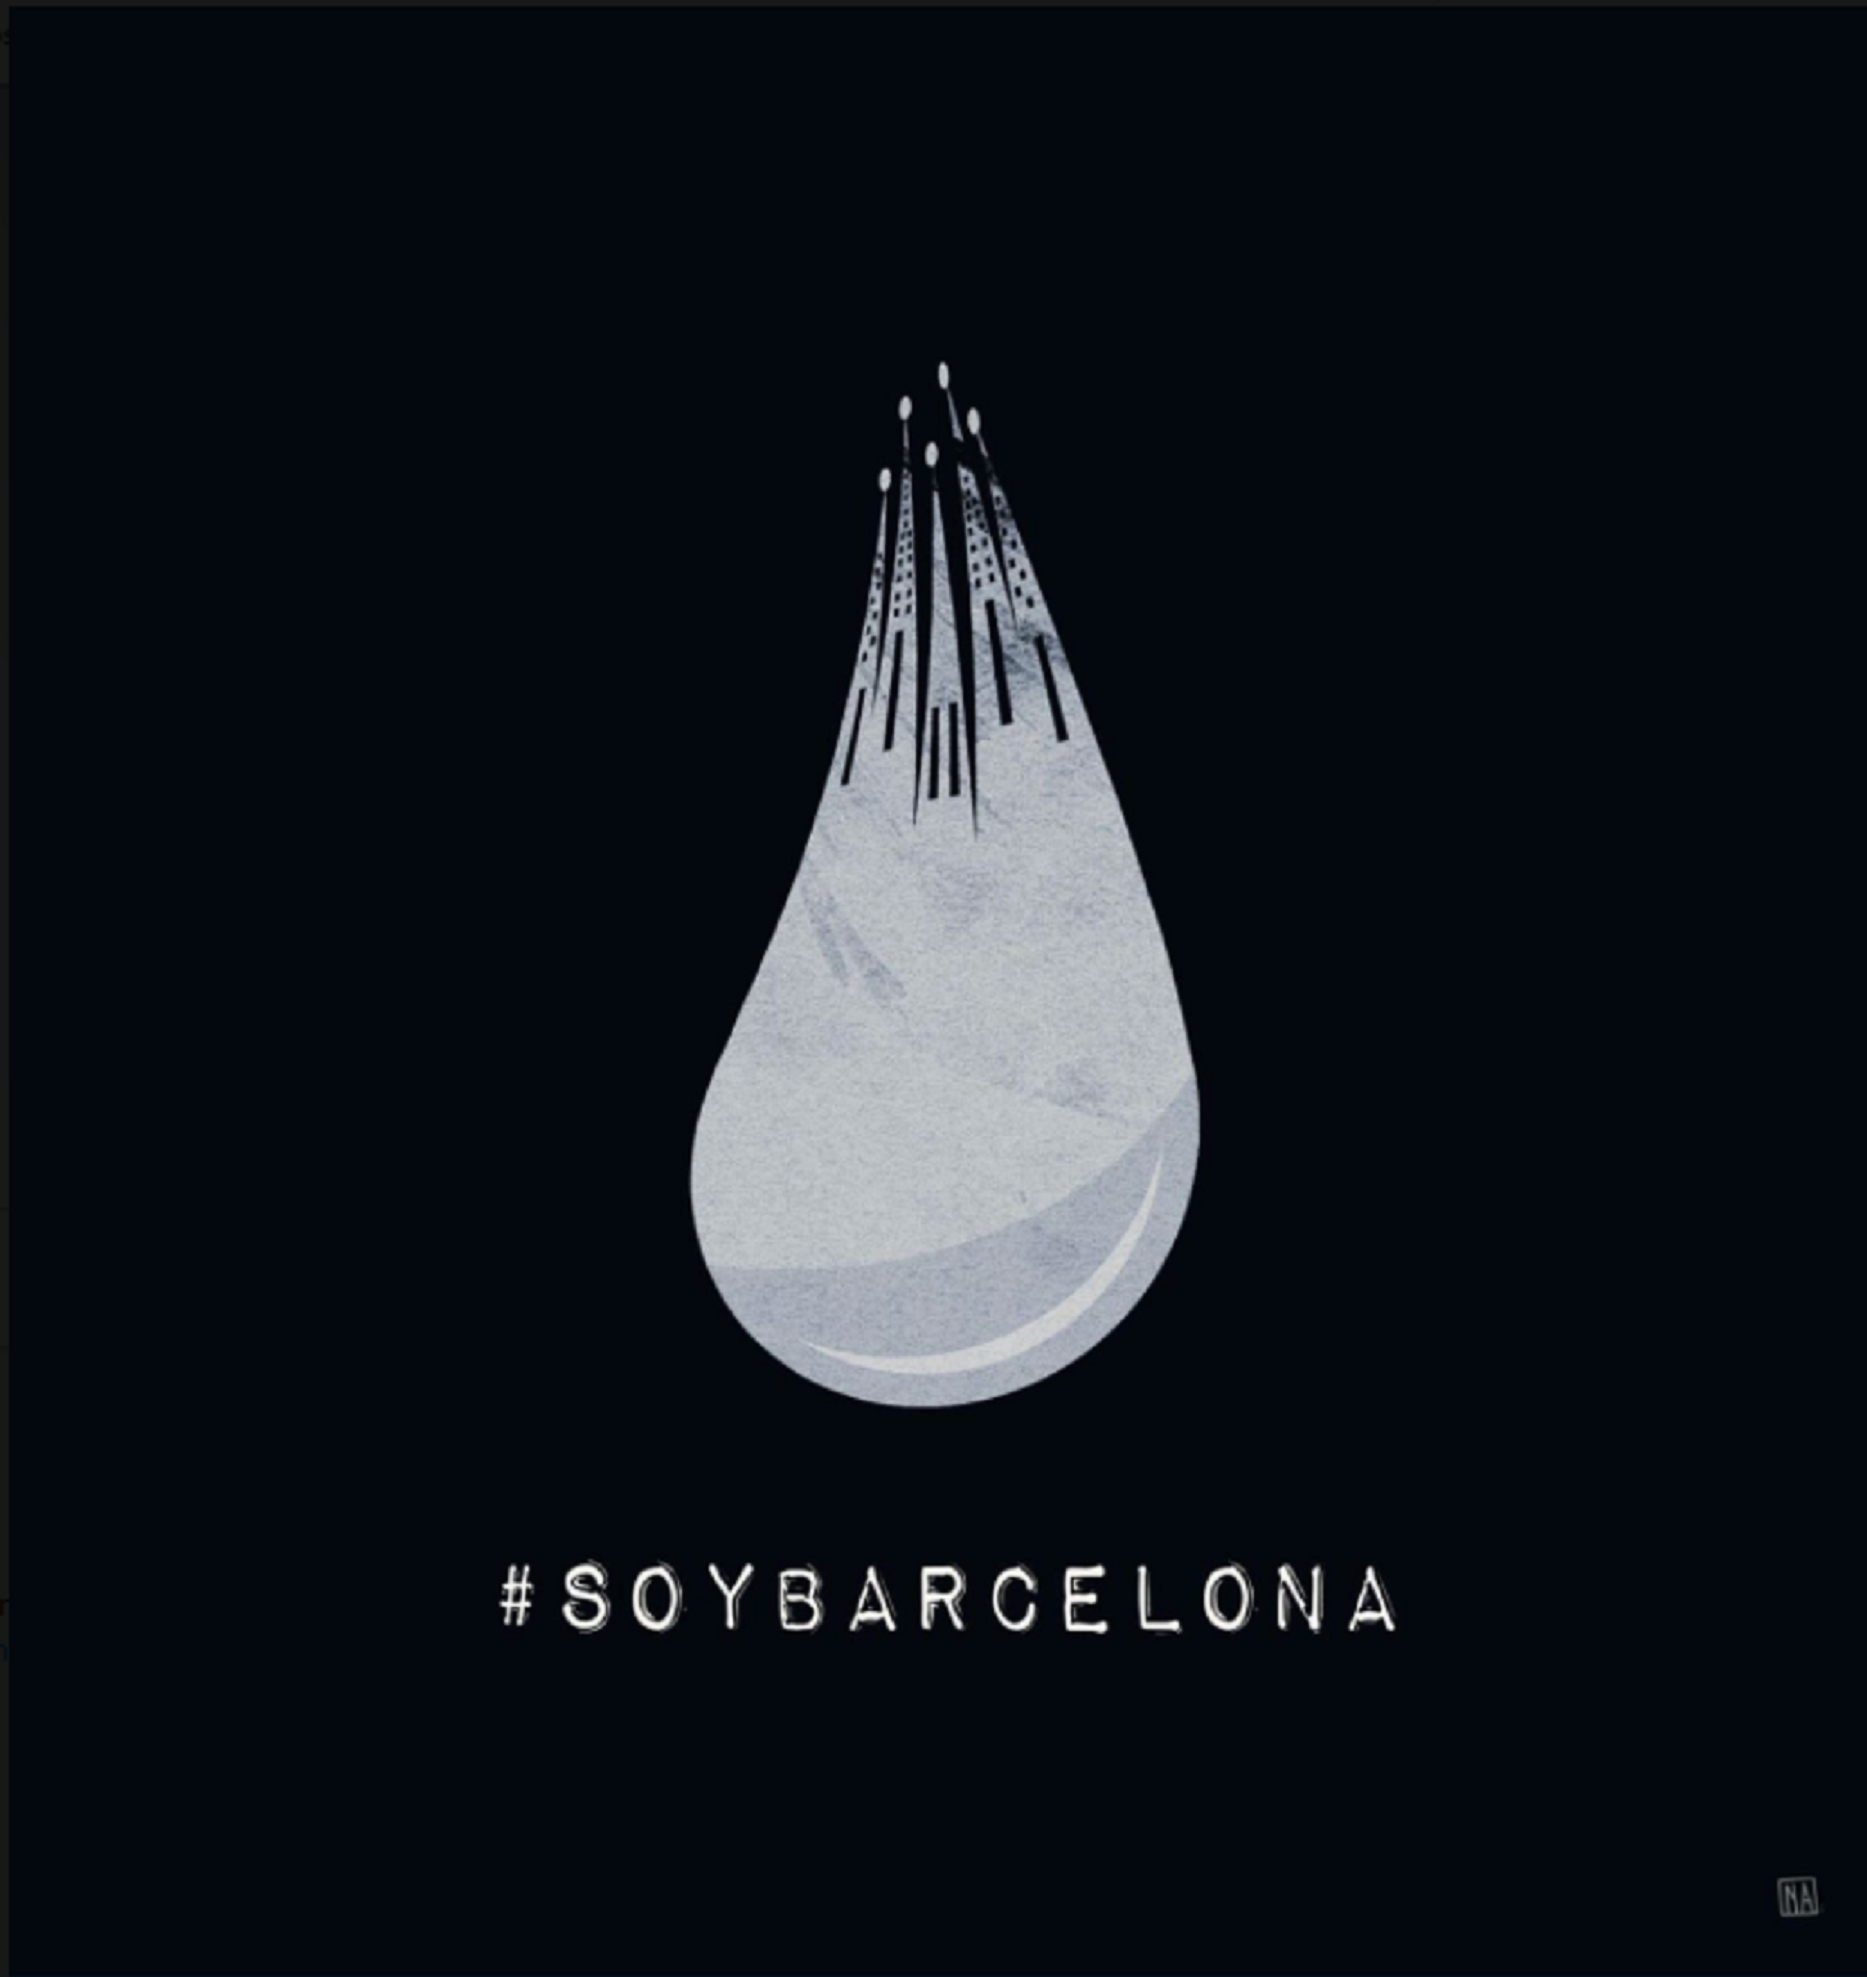 Artistas e ilustradores de todo el mundo se solidarizan con Barcelona